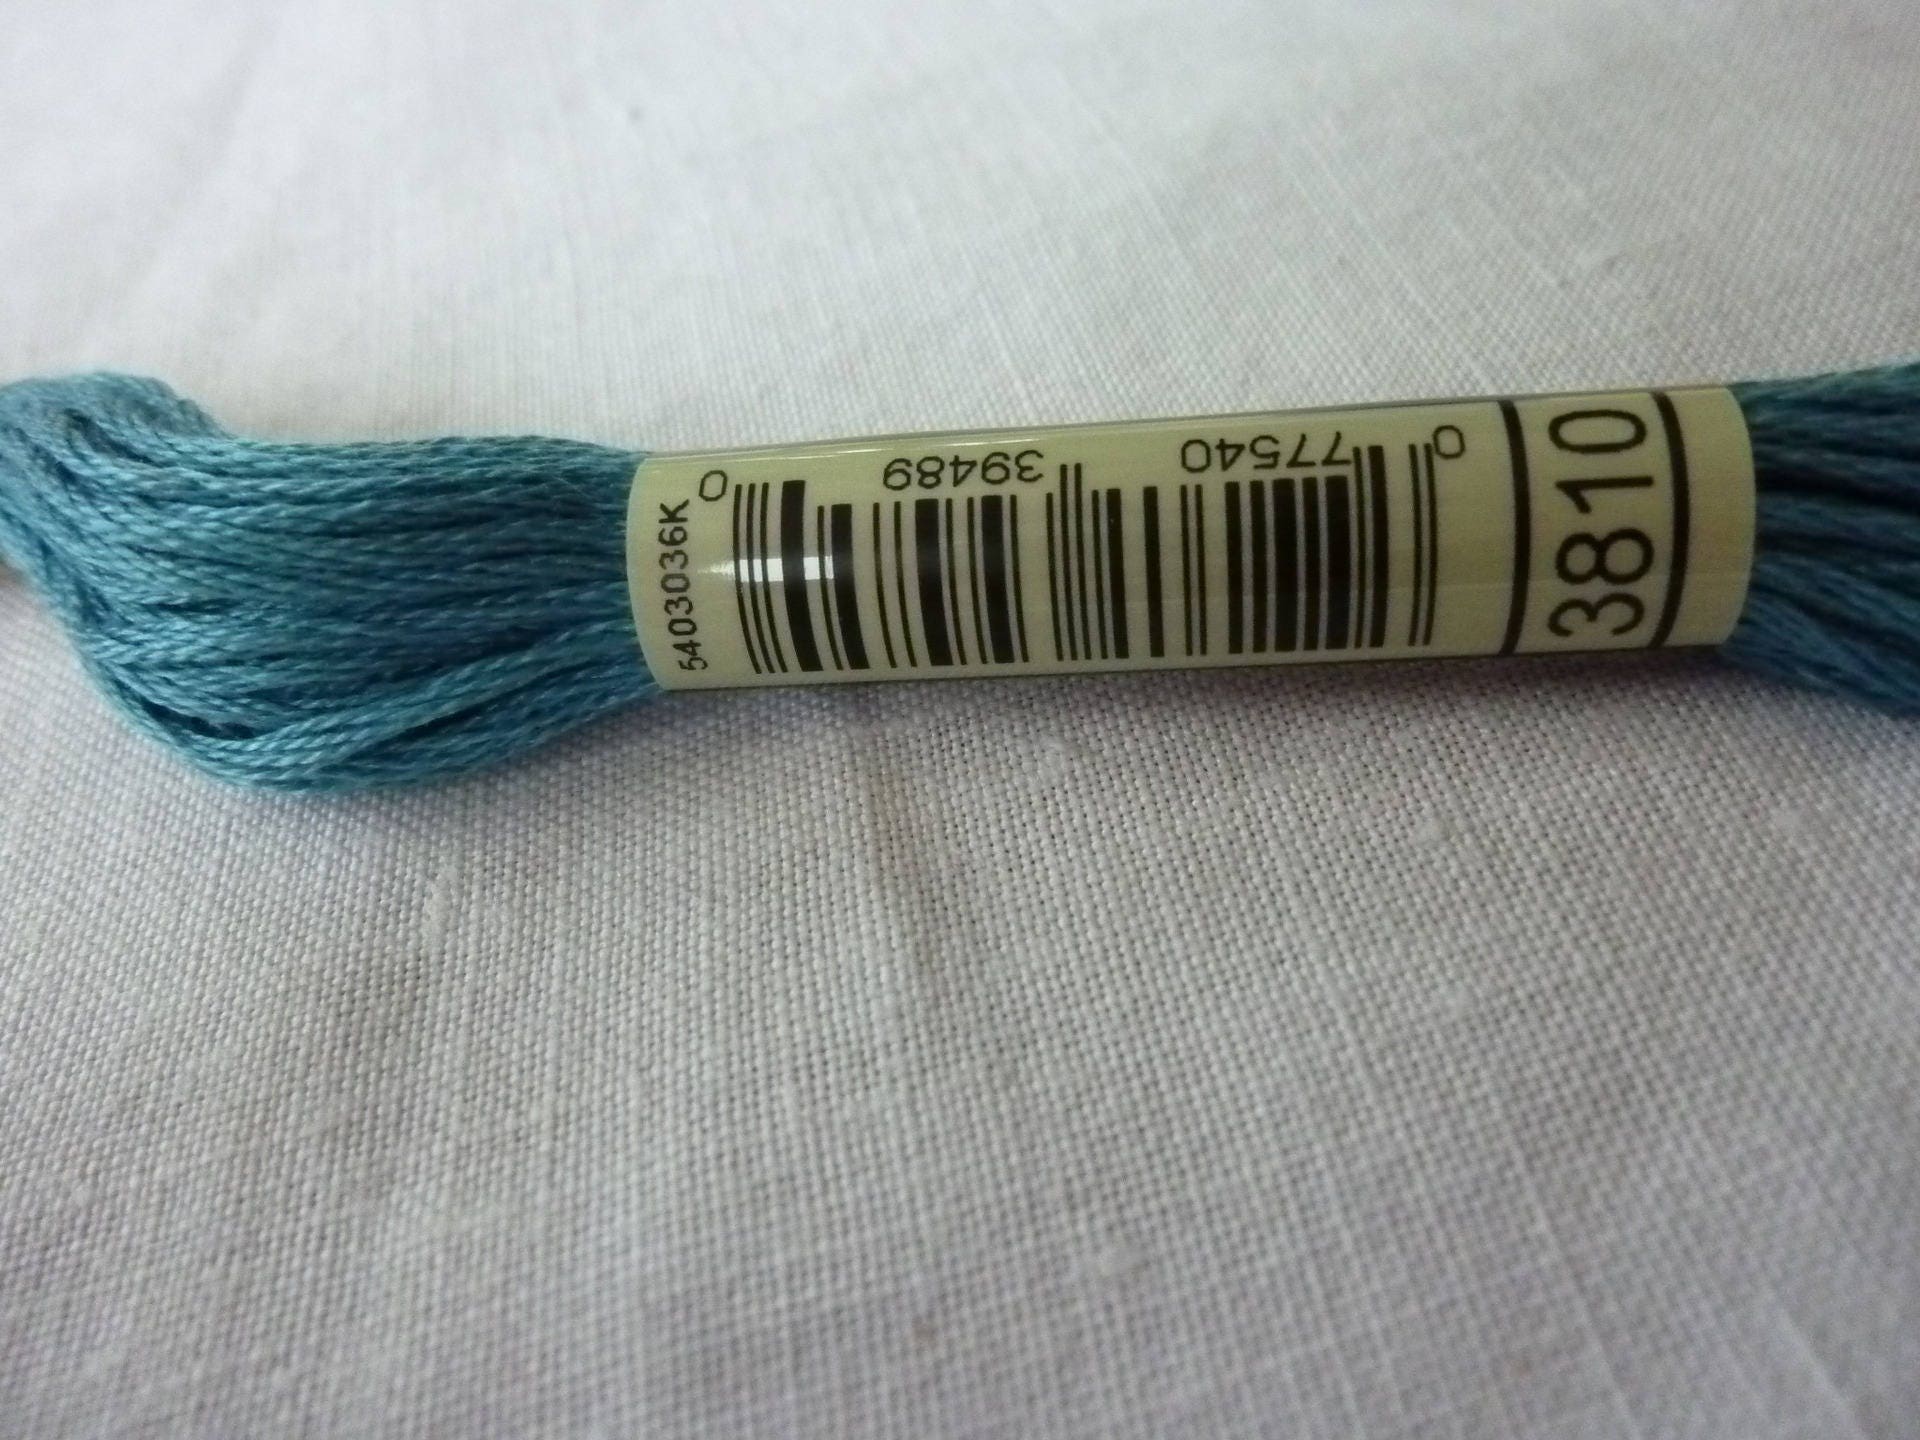 Black Colours DMC Stranded Cotton Embroidery Thread Set of 3 Skein